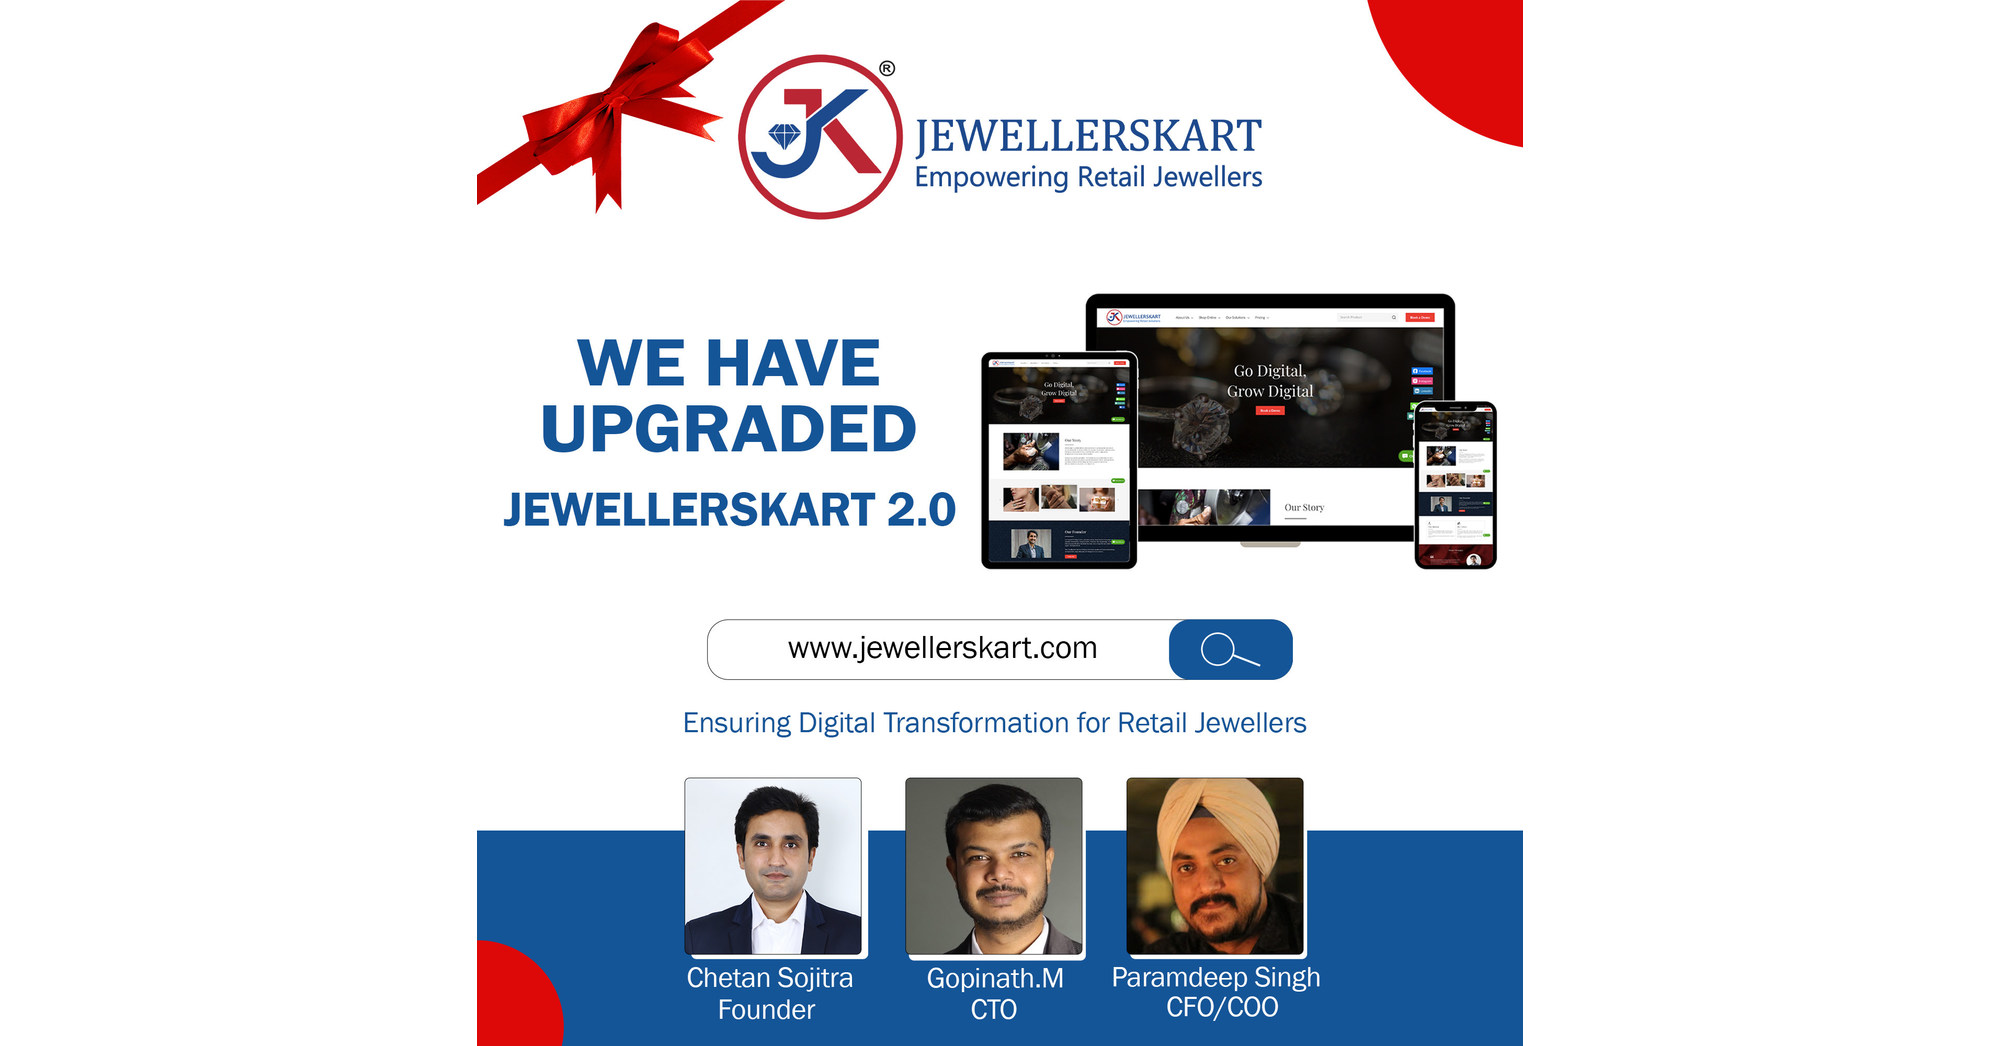 Jewellerskart launches India’s Most Advanced Jewellery E-commerce Platform ‘Jewellerskart 2.0’